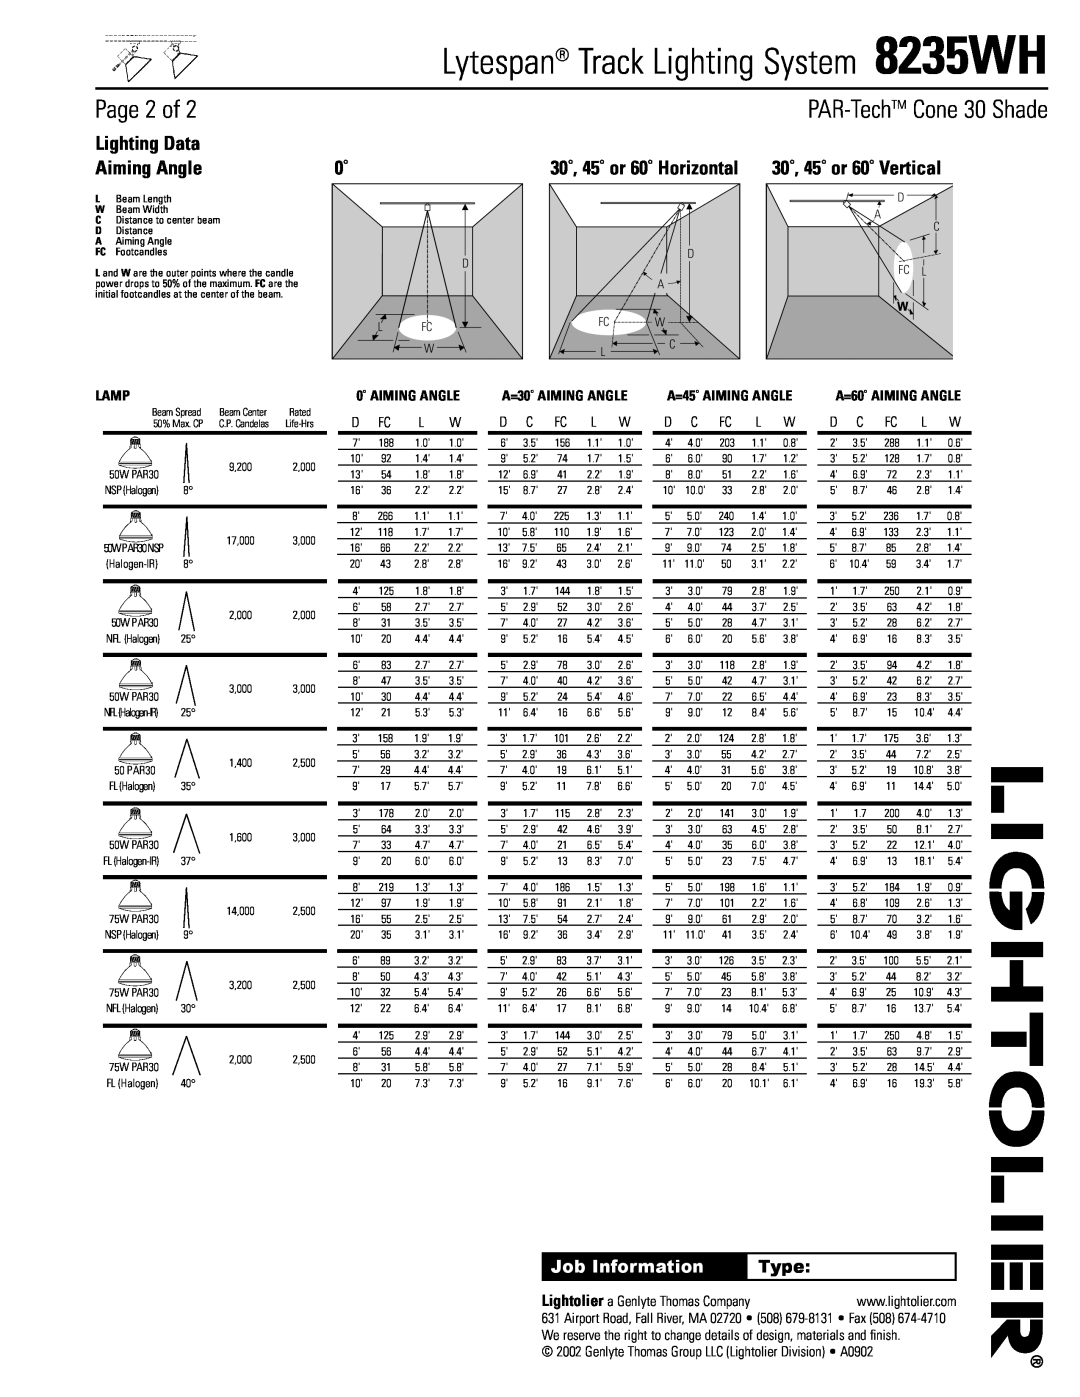 Lightolier 8235WH Page 2 of, Lighting Data, Aiming Angle, 30˚, 45˚ or 60˚ Horizontal, Type, Lamp, 0˚ AIMING ANGLE 